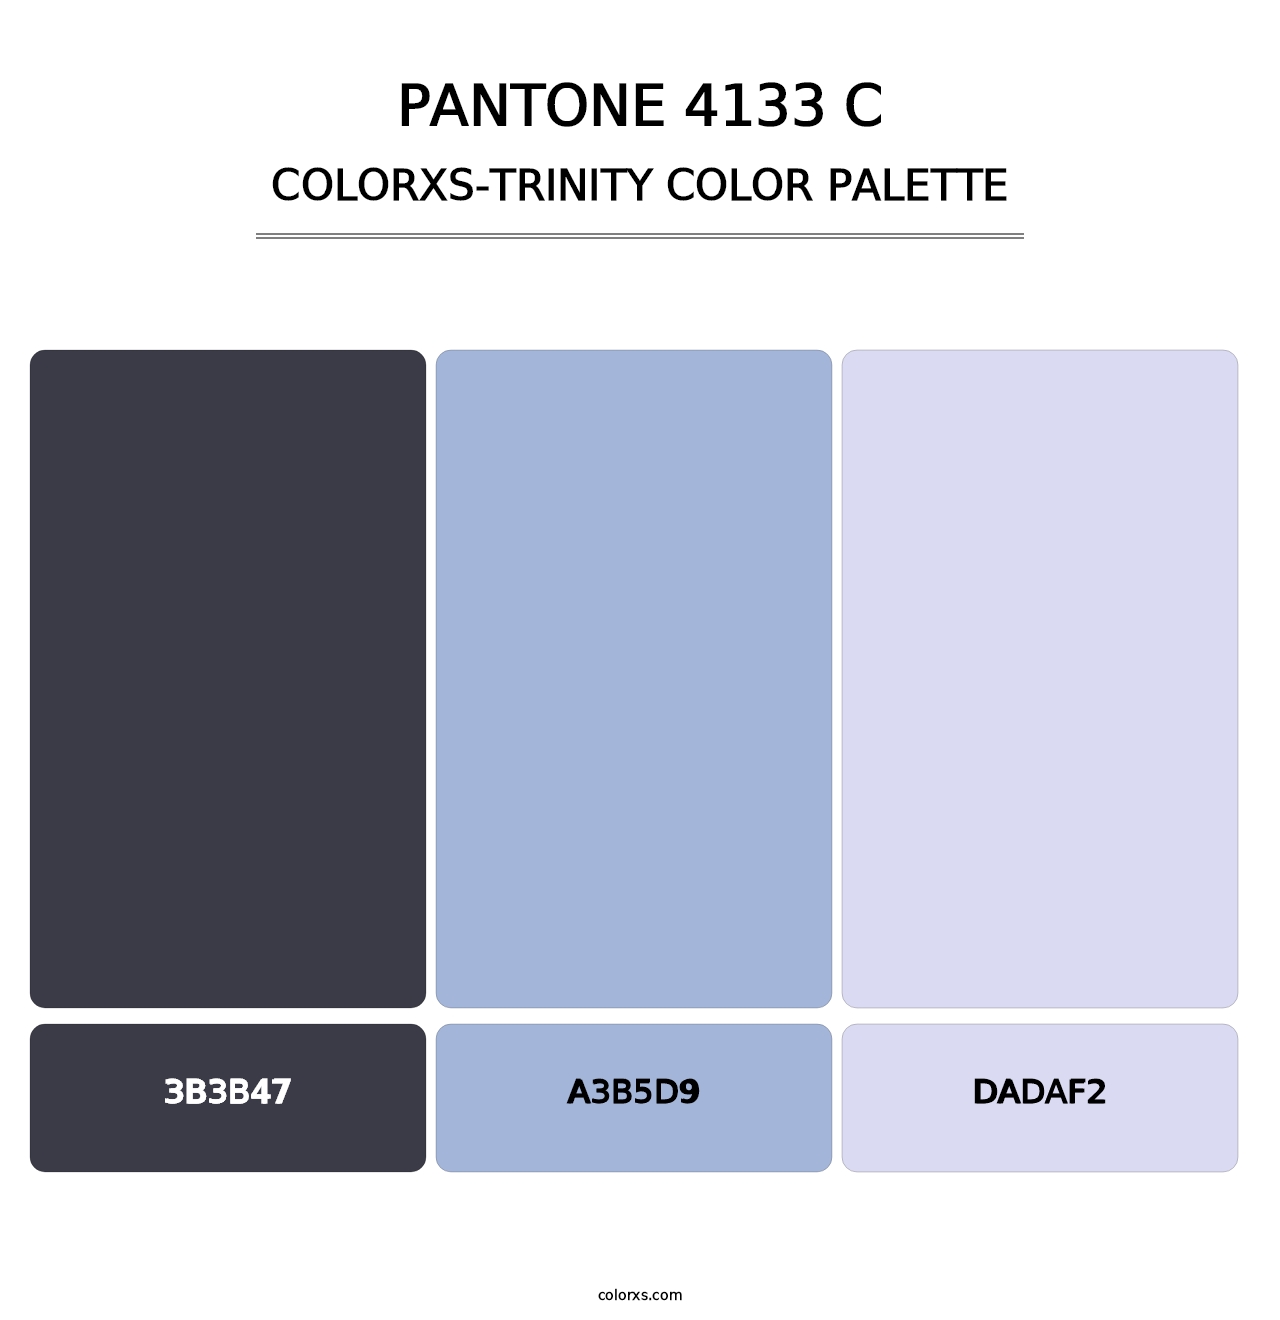 PANTONE 4133 C - Colorxs Trinity Palette